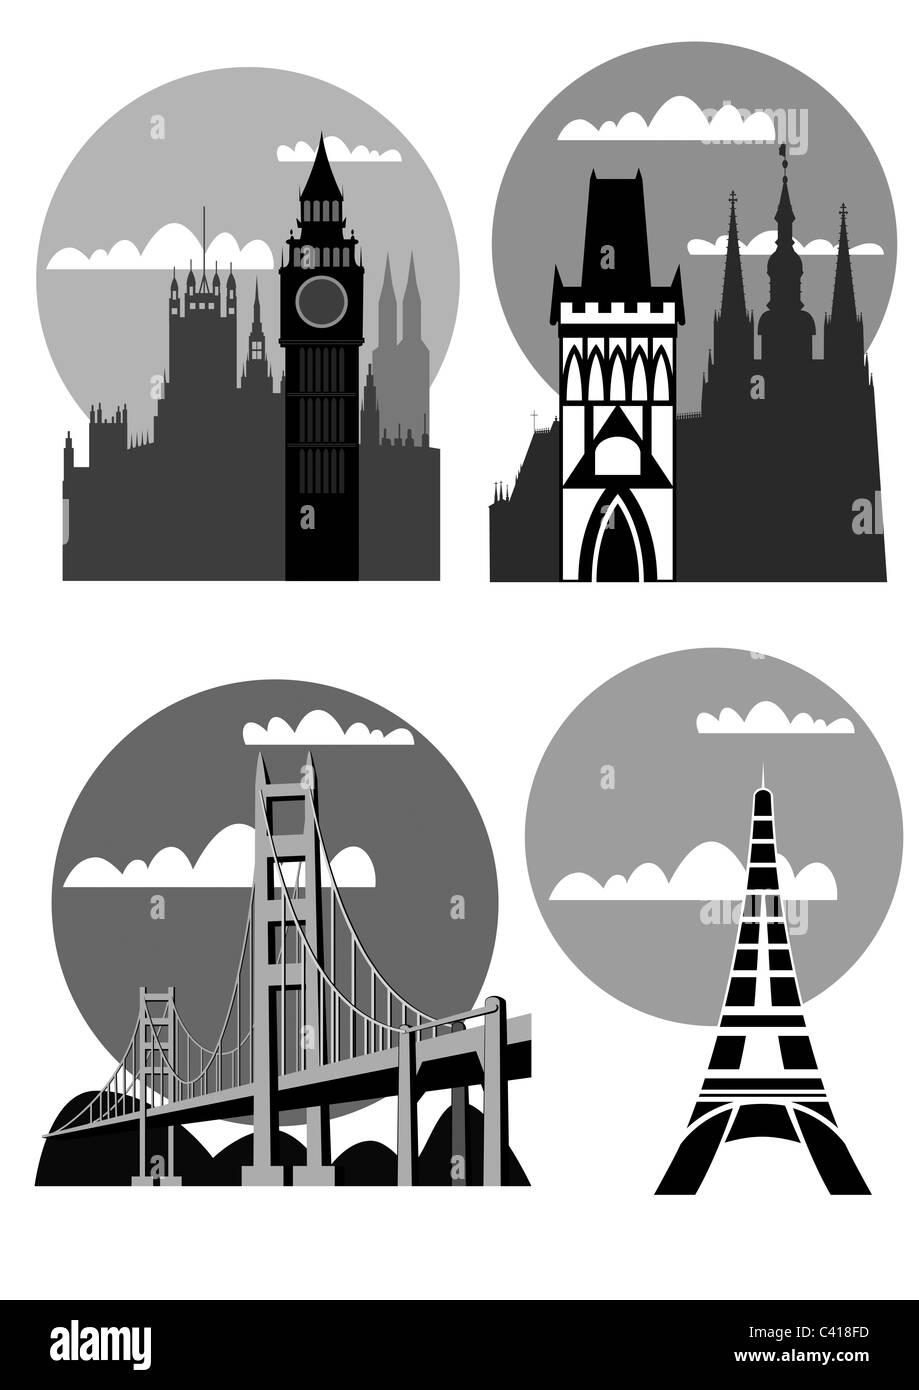 illustrations of the famous cities - London, Paris, San Francisco, Prague Stock Photo